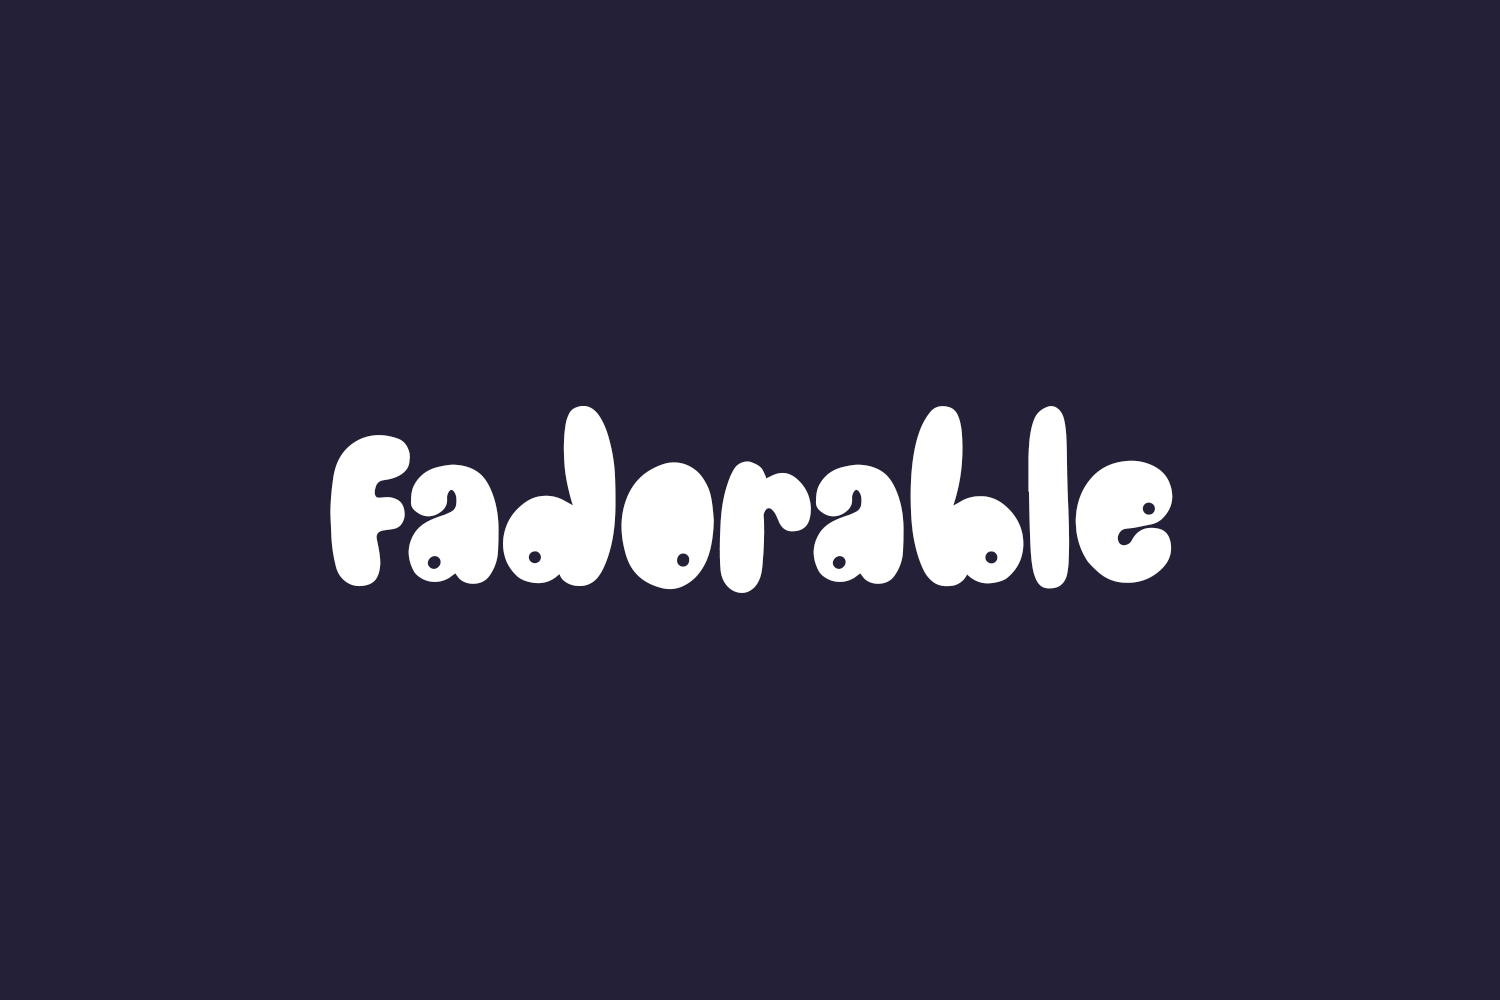 Fadorable Free Font